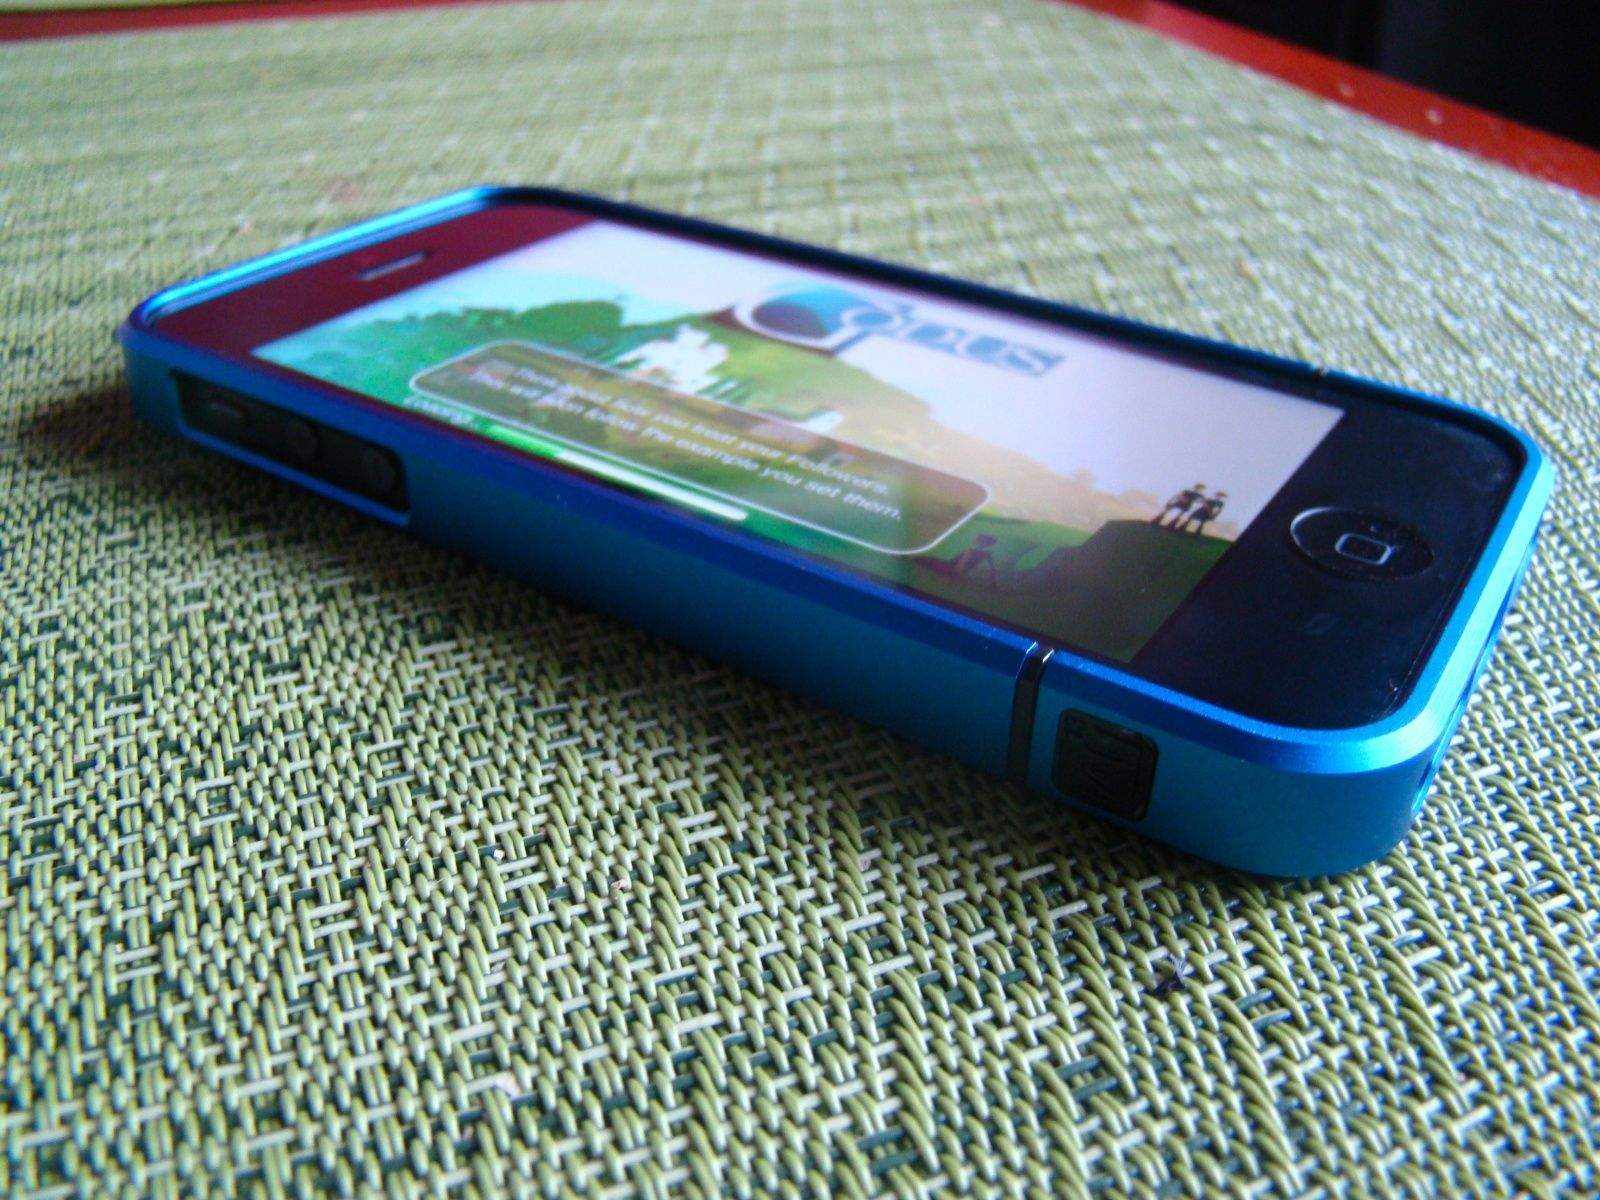 Stylish metallic iPhone case